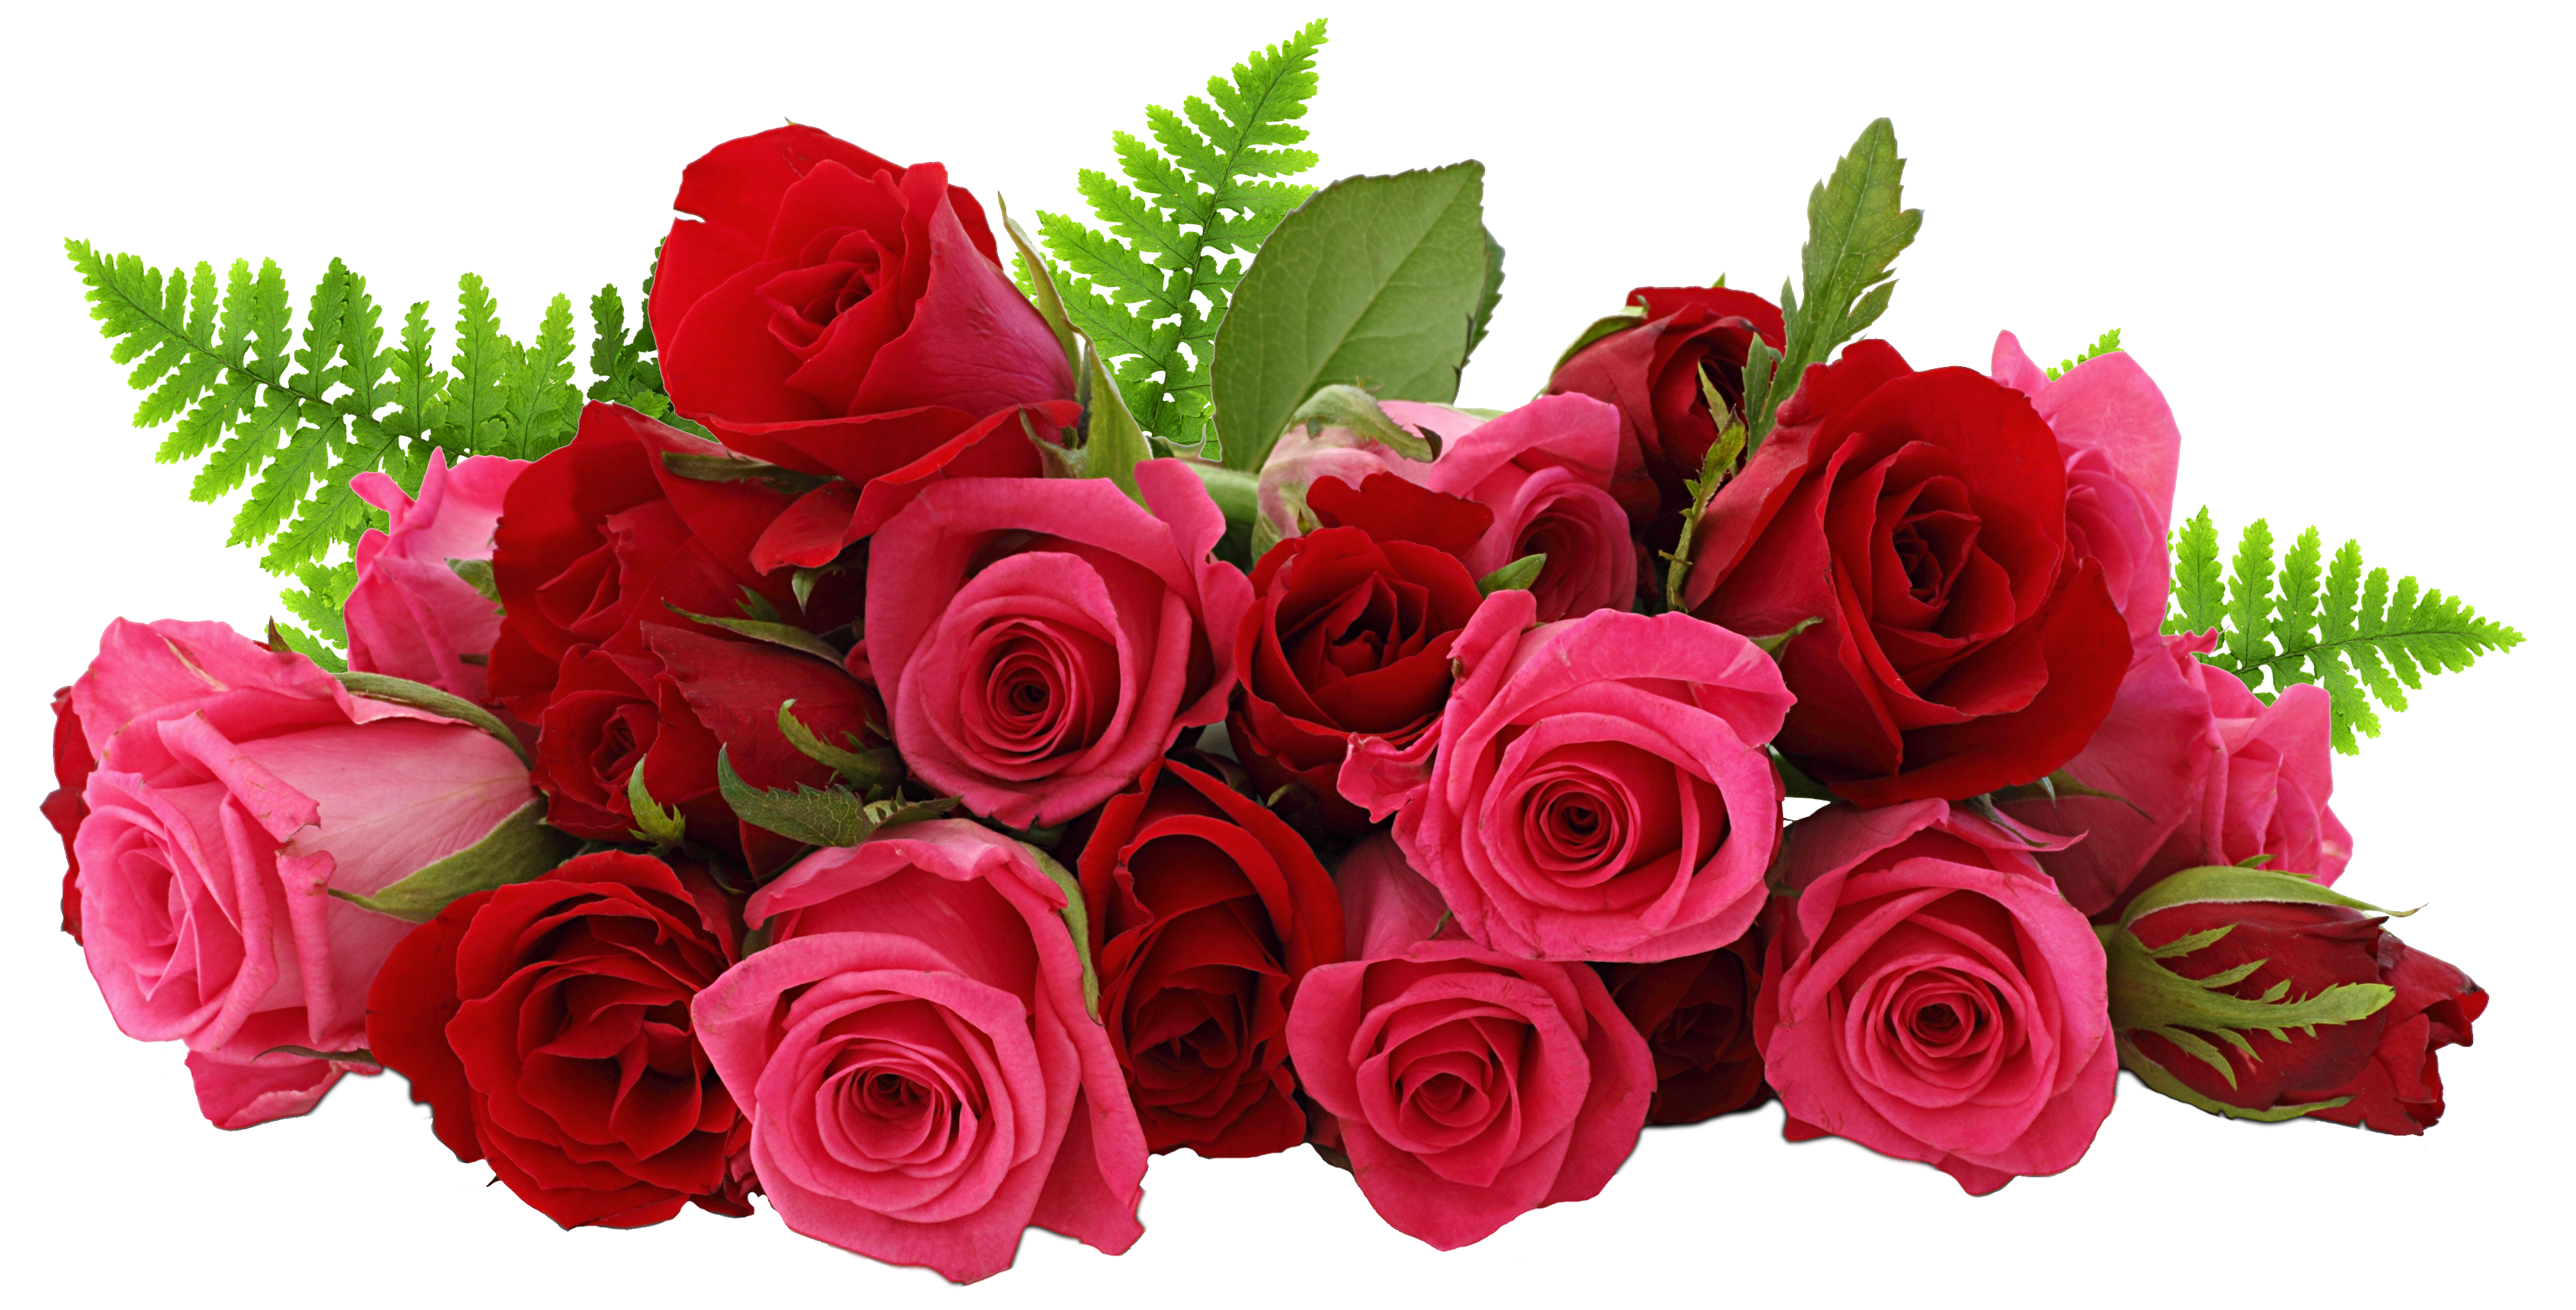 roses flower images download png #8186